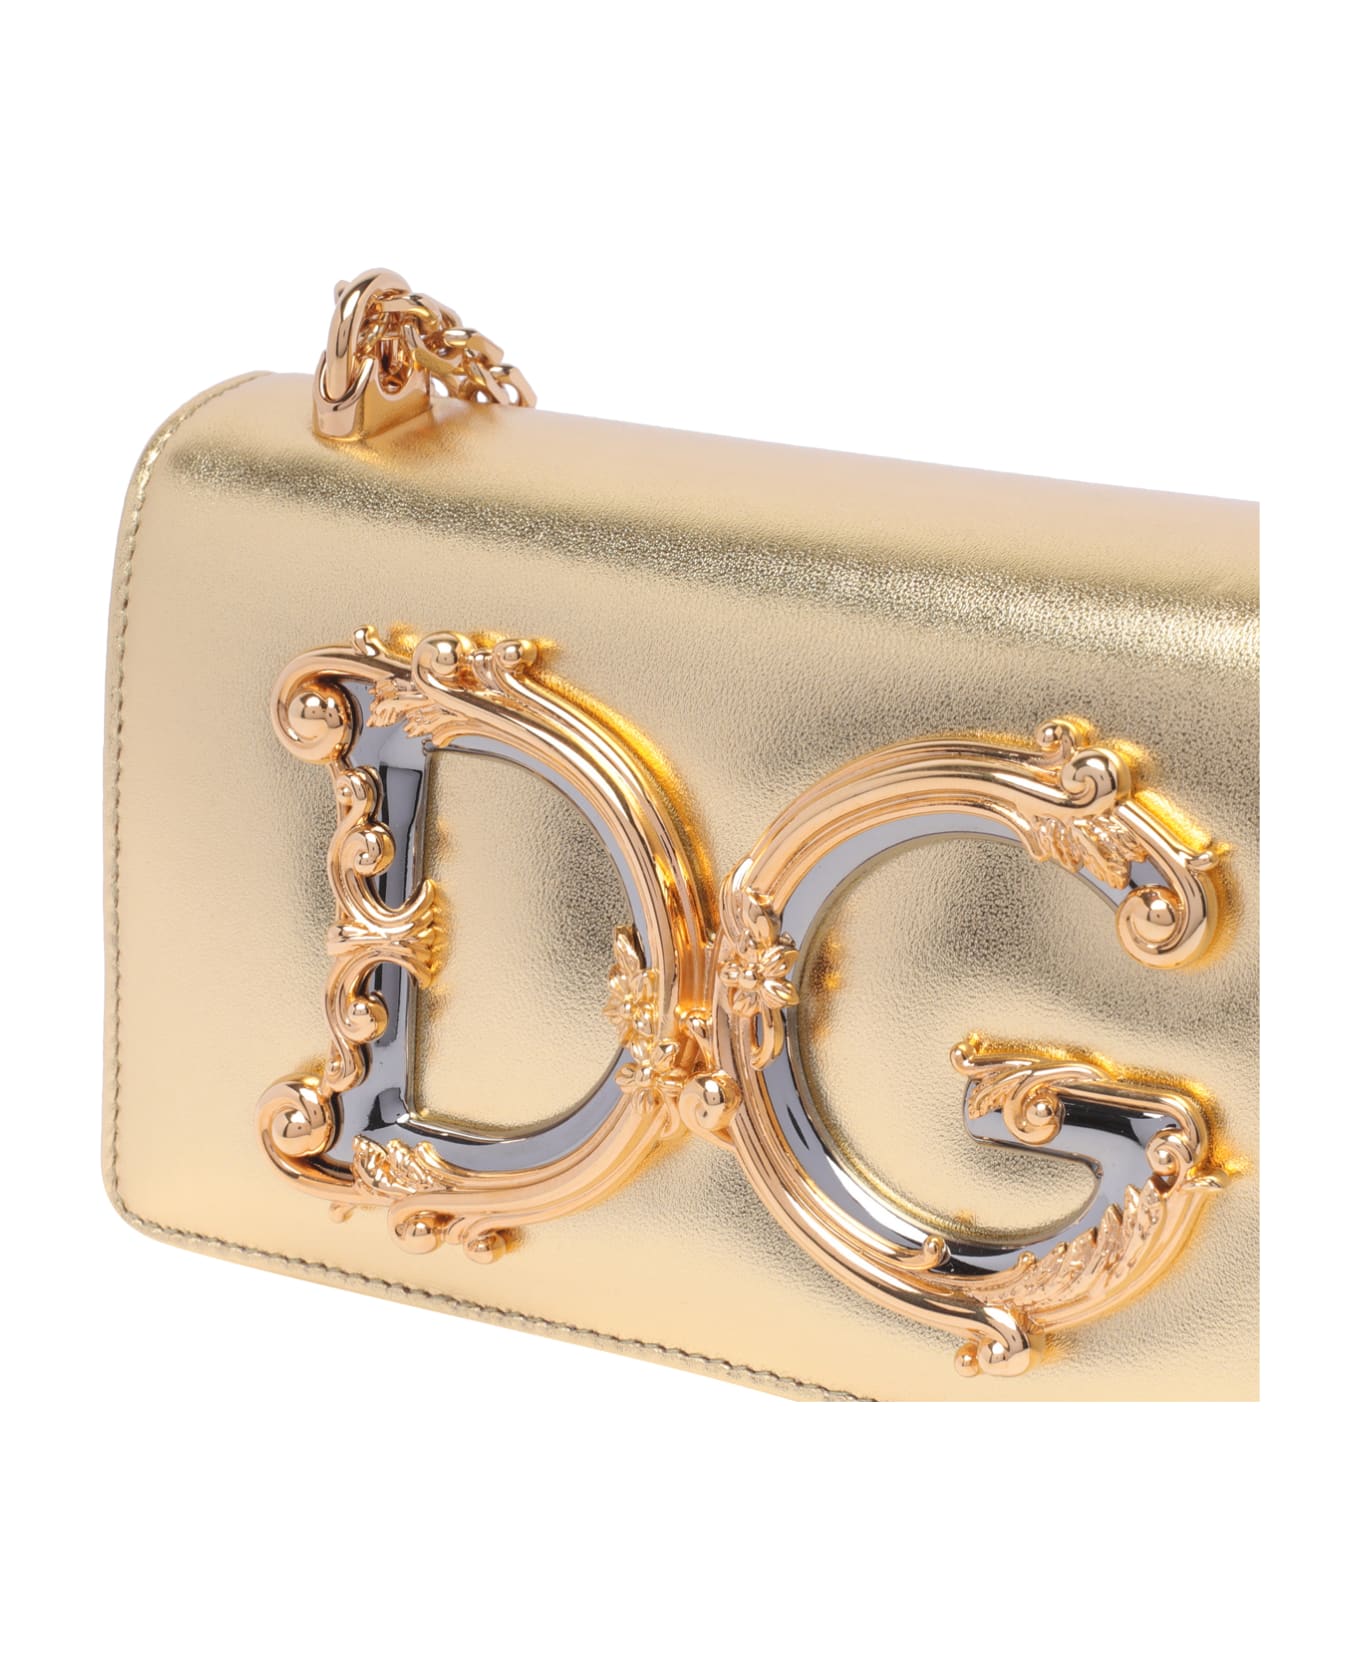 Dolce & Gabbana Dg Logo Phone Bag - Golden